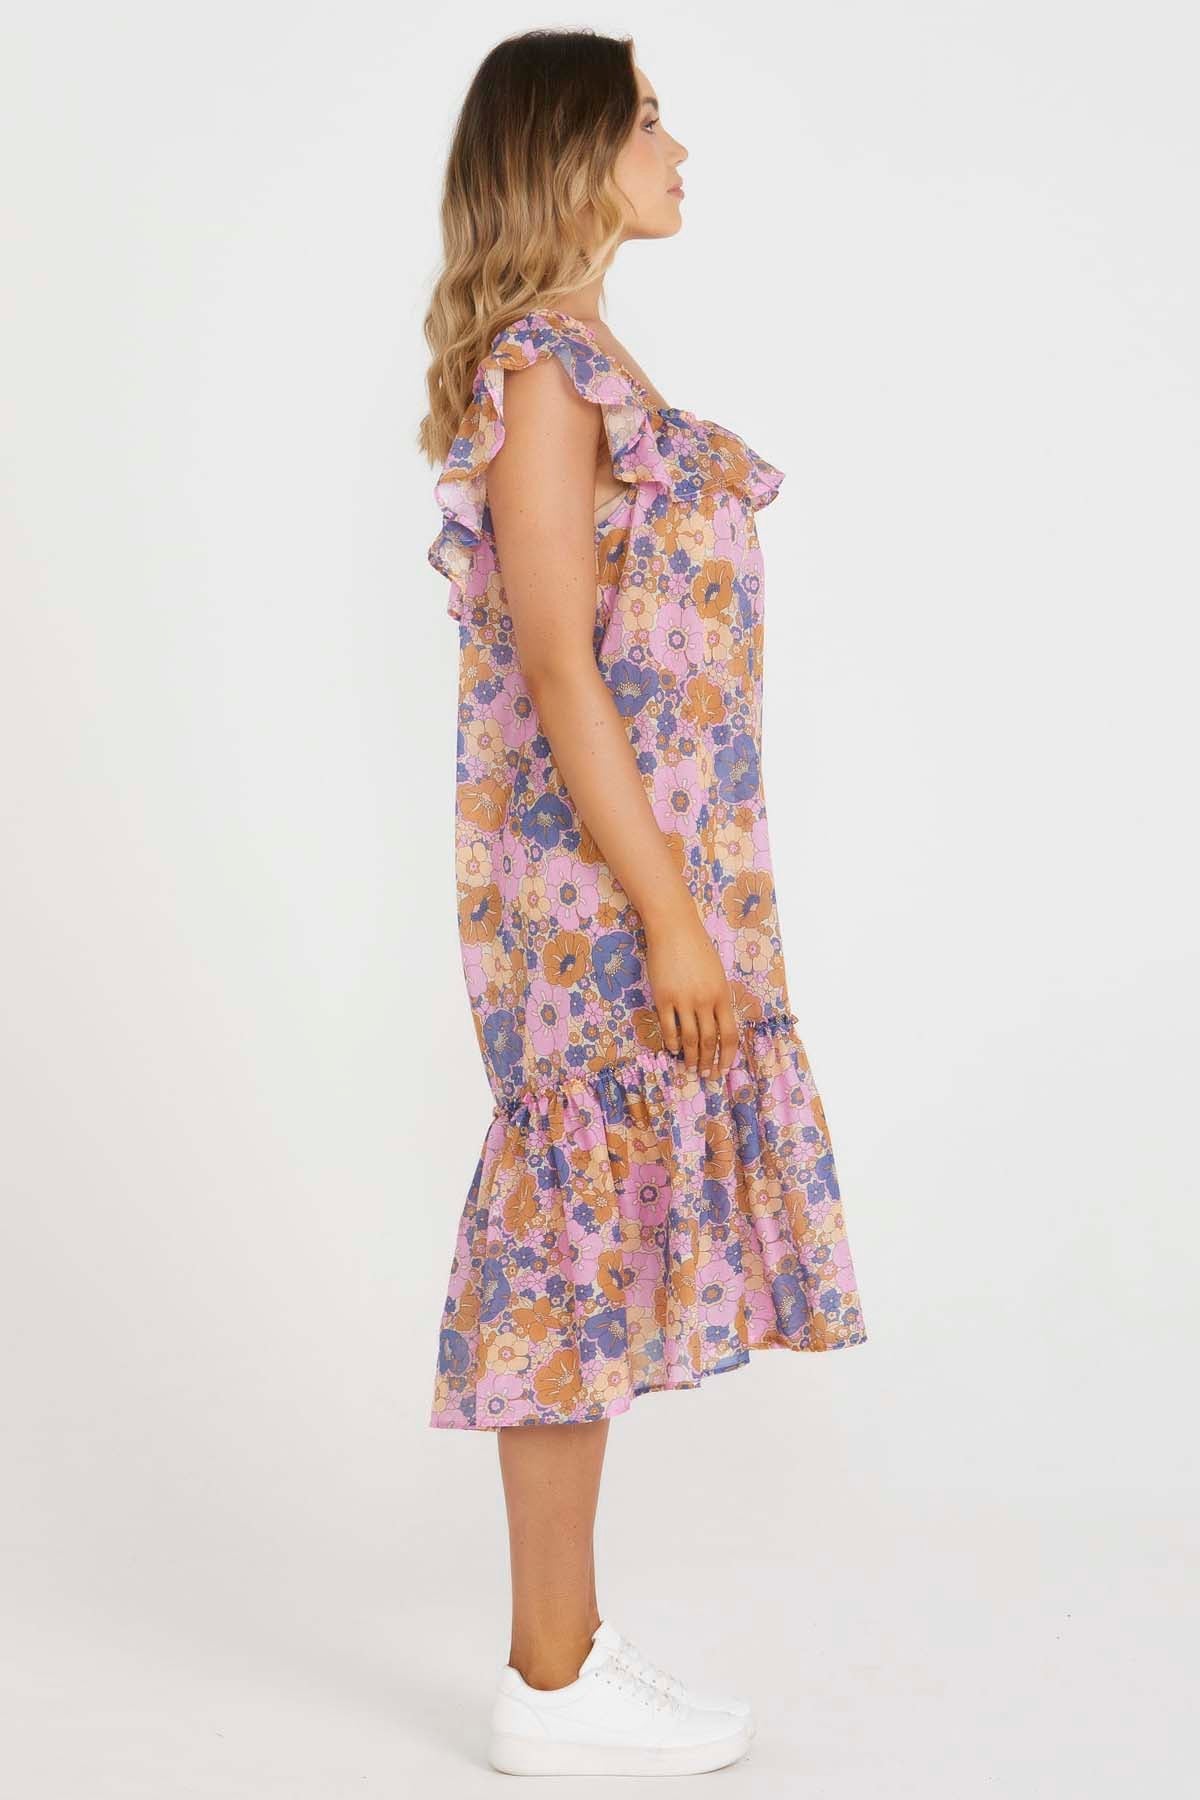 Sass Isla Ruffle Midi Dress in Retro Floral Print - Hey Sara